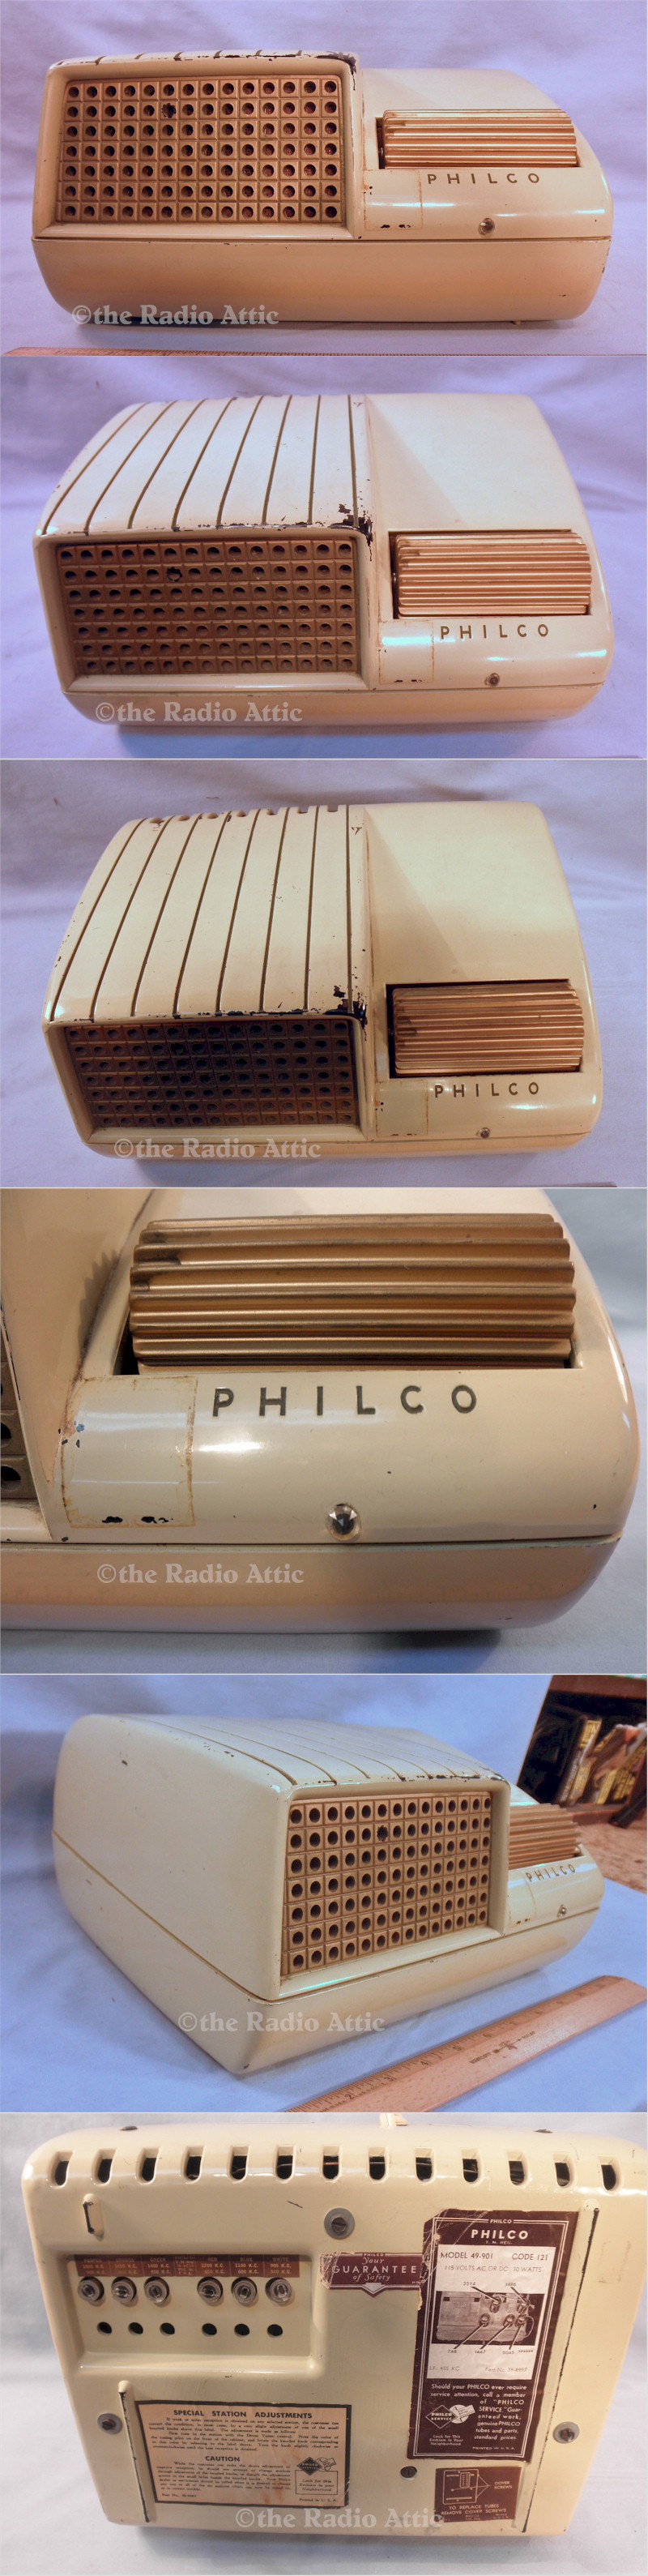 Philco 49-901 